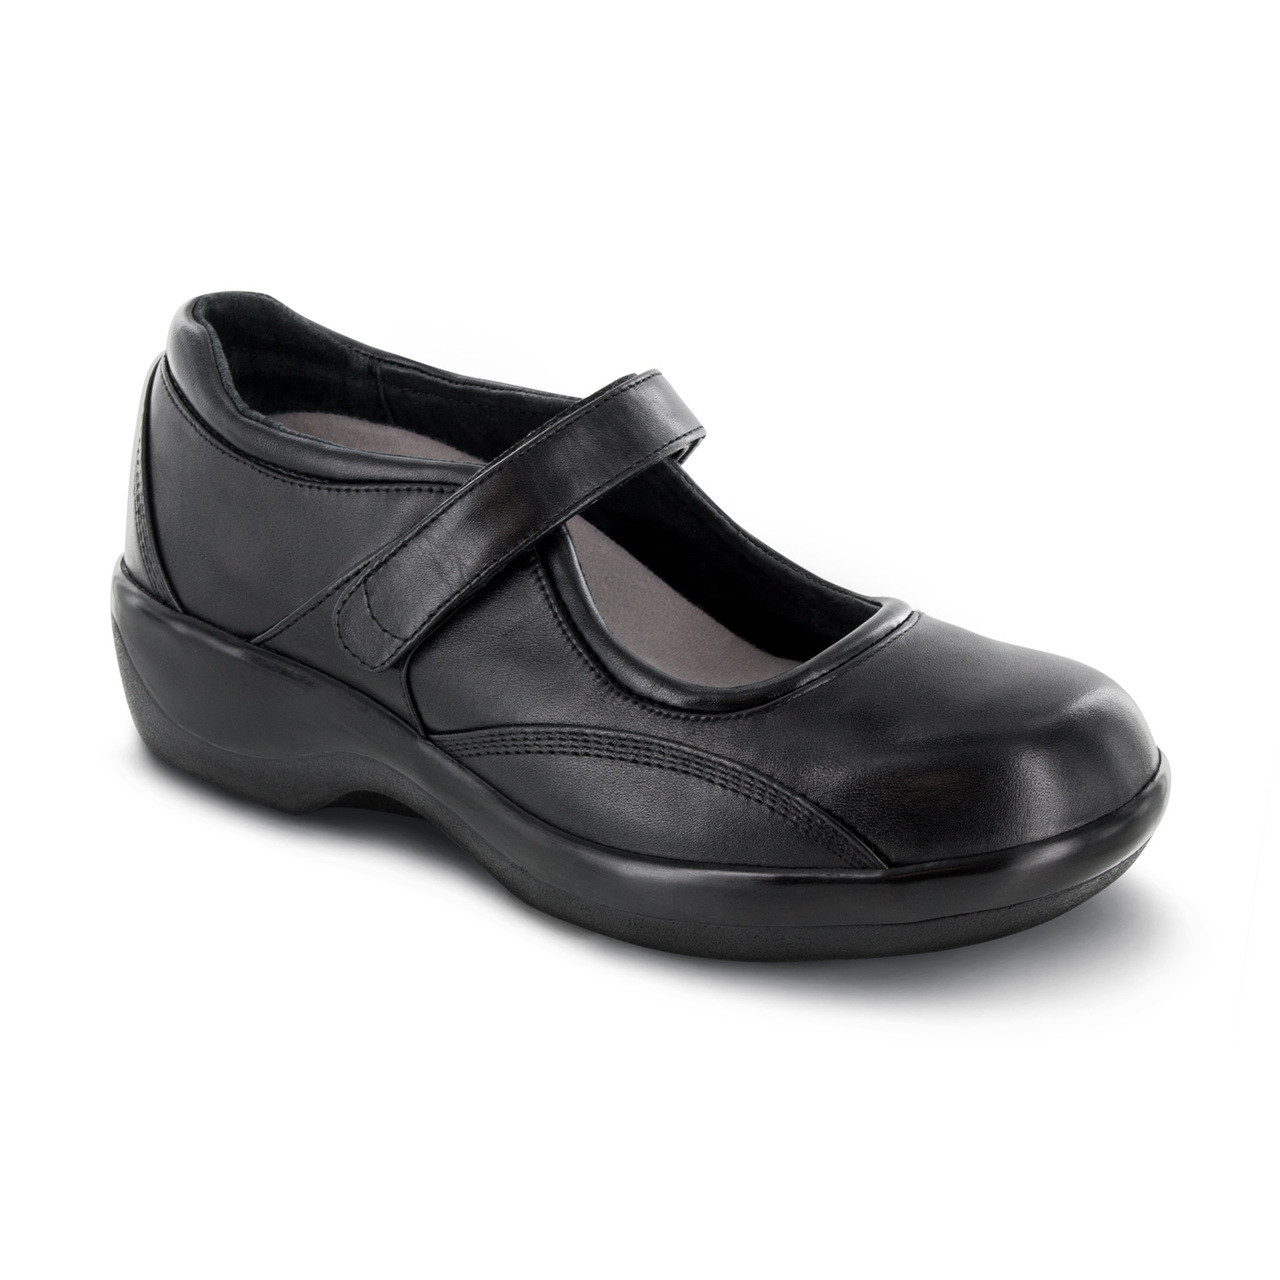 women's black mary jane shoes